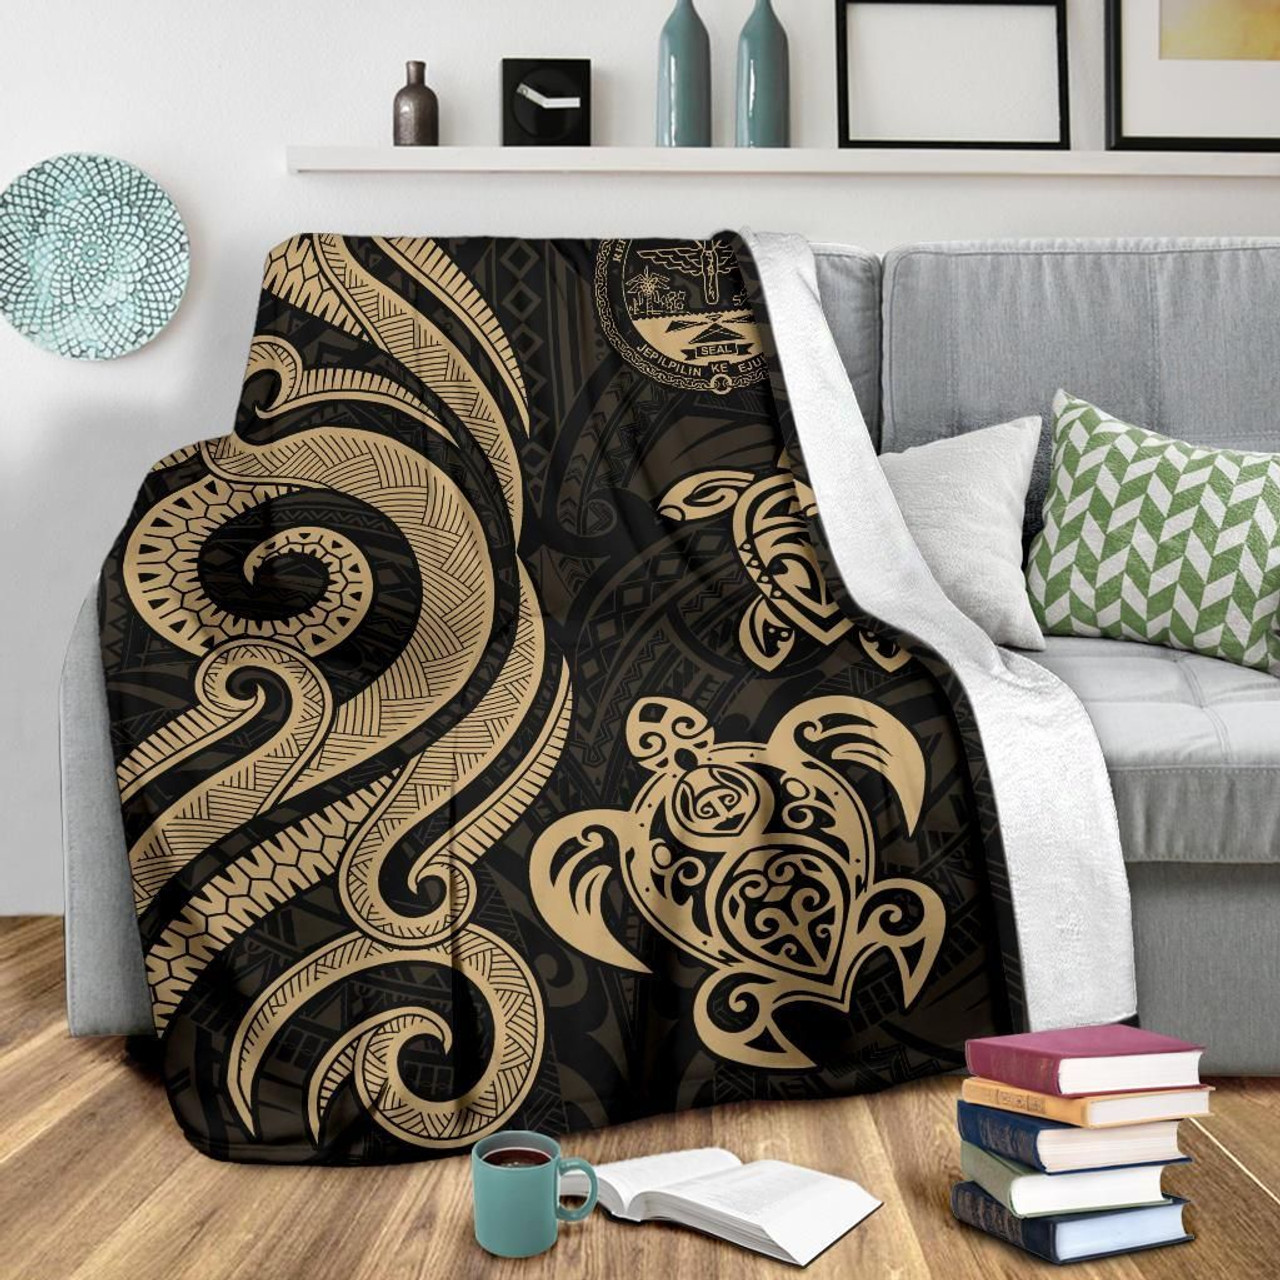 Marshall Islands Premium Blanket - Tentacle Turtle Gold 3